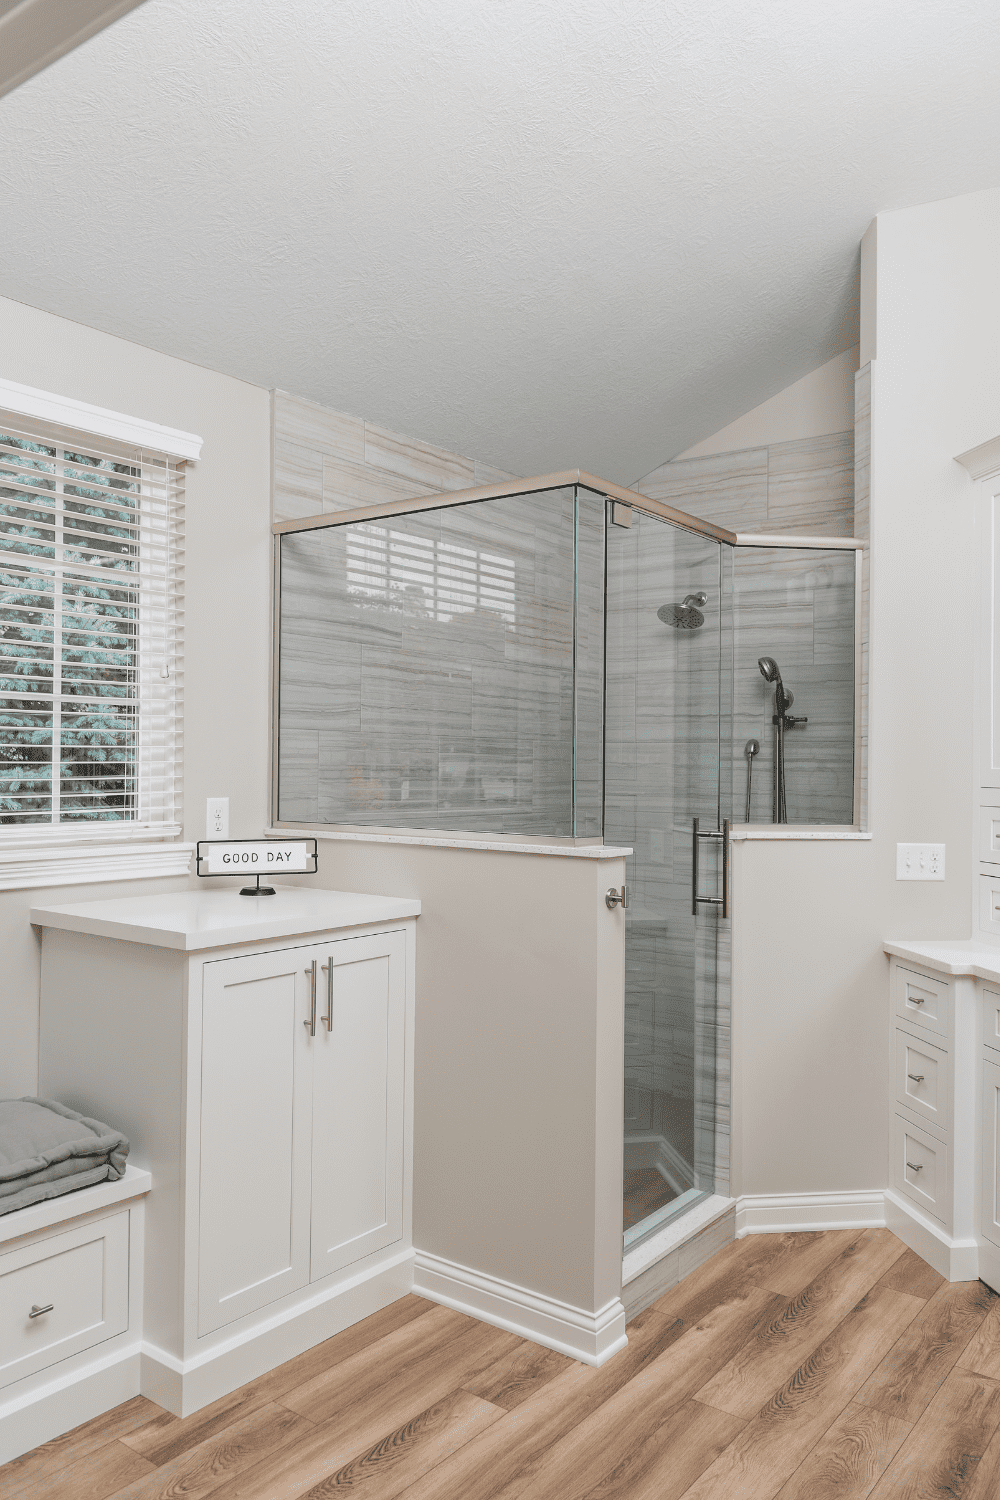 Nicholas Design Build | A glass shower stall in a bathroom remodel.